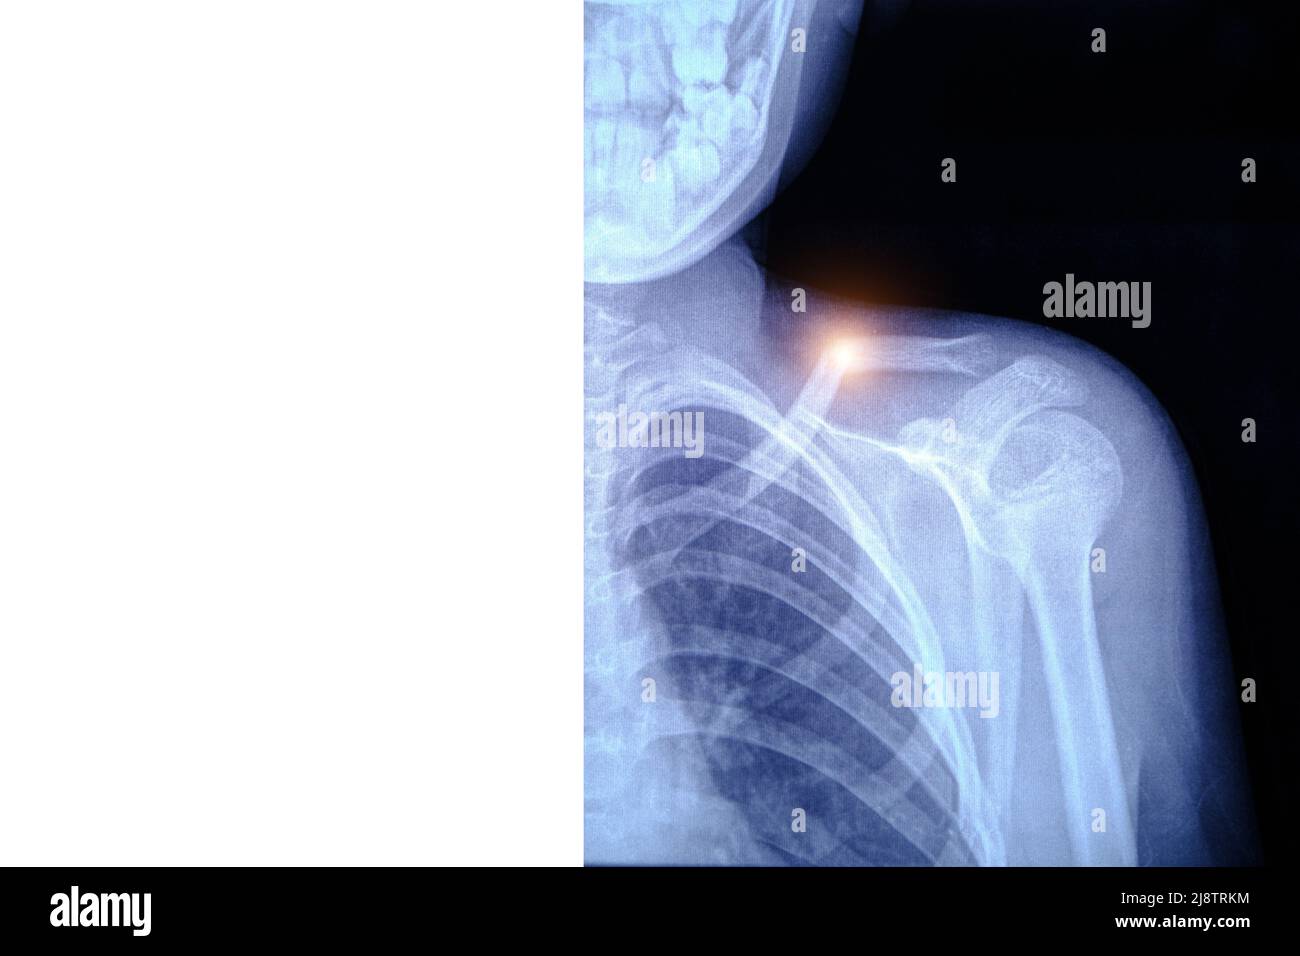 X-ray image broken collarbone person. Stock Photo